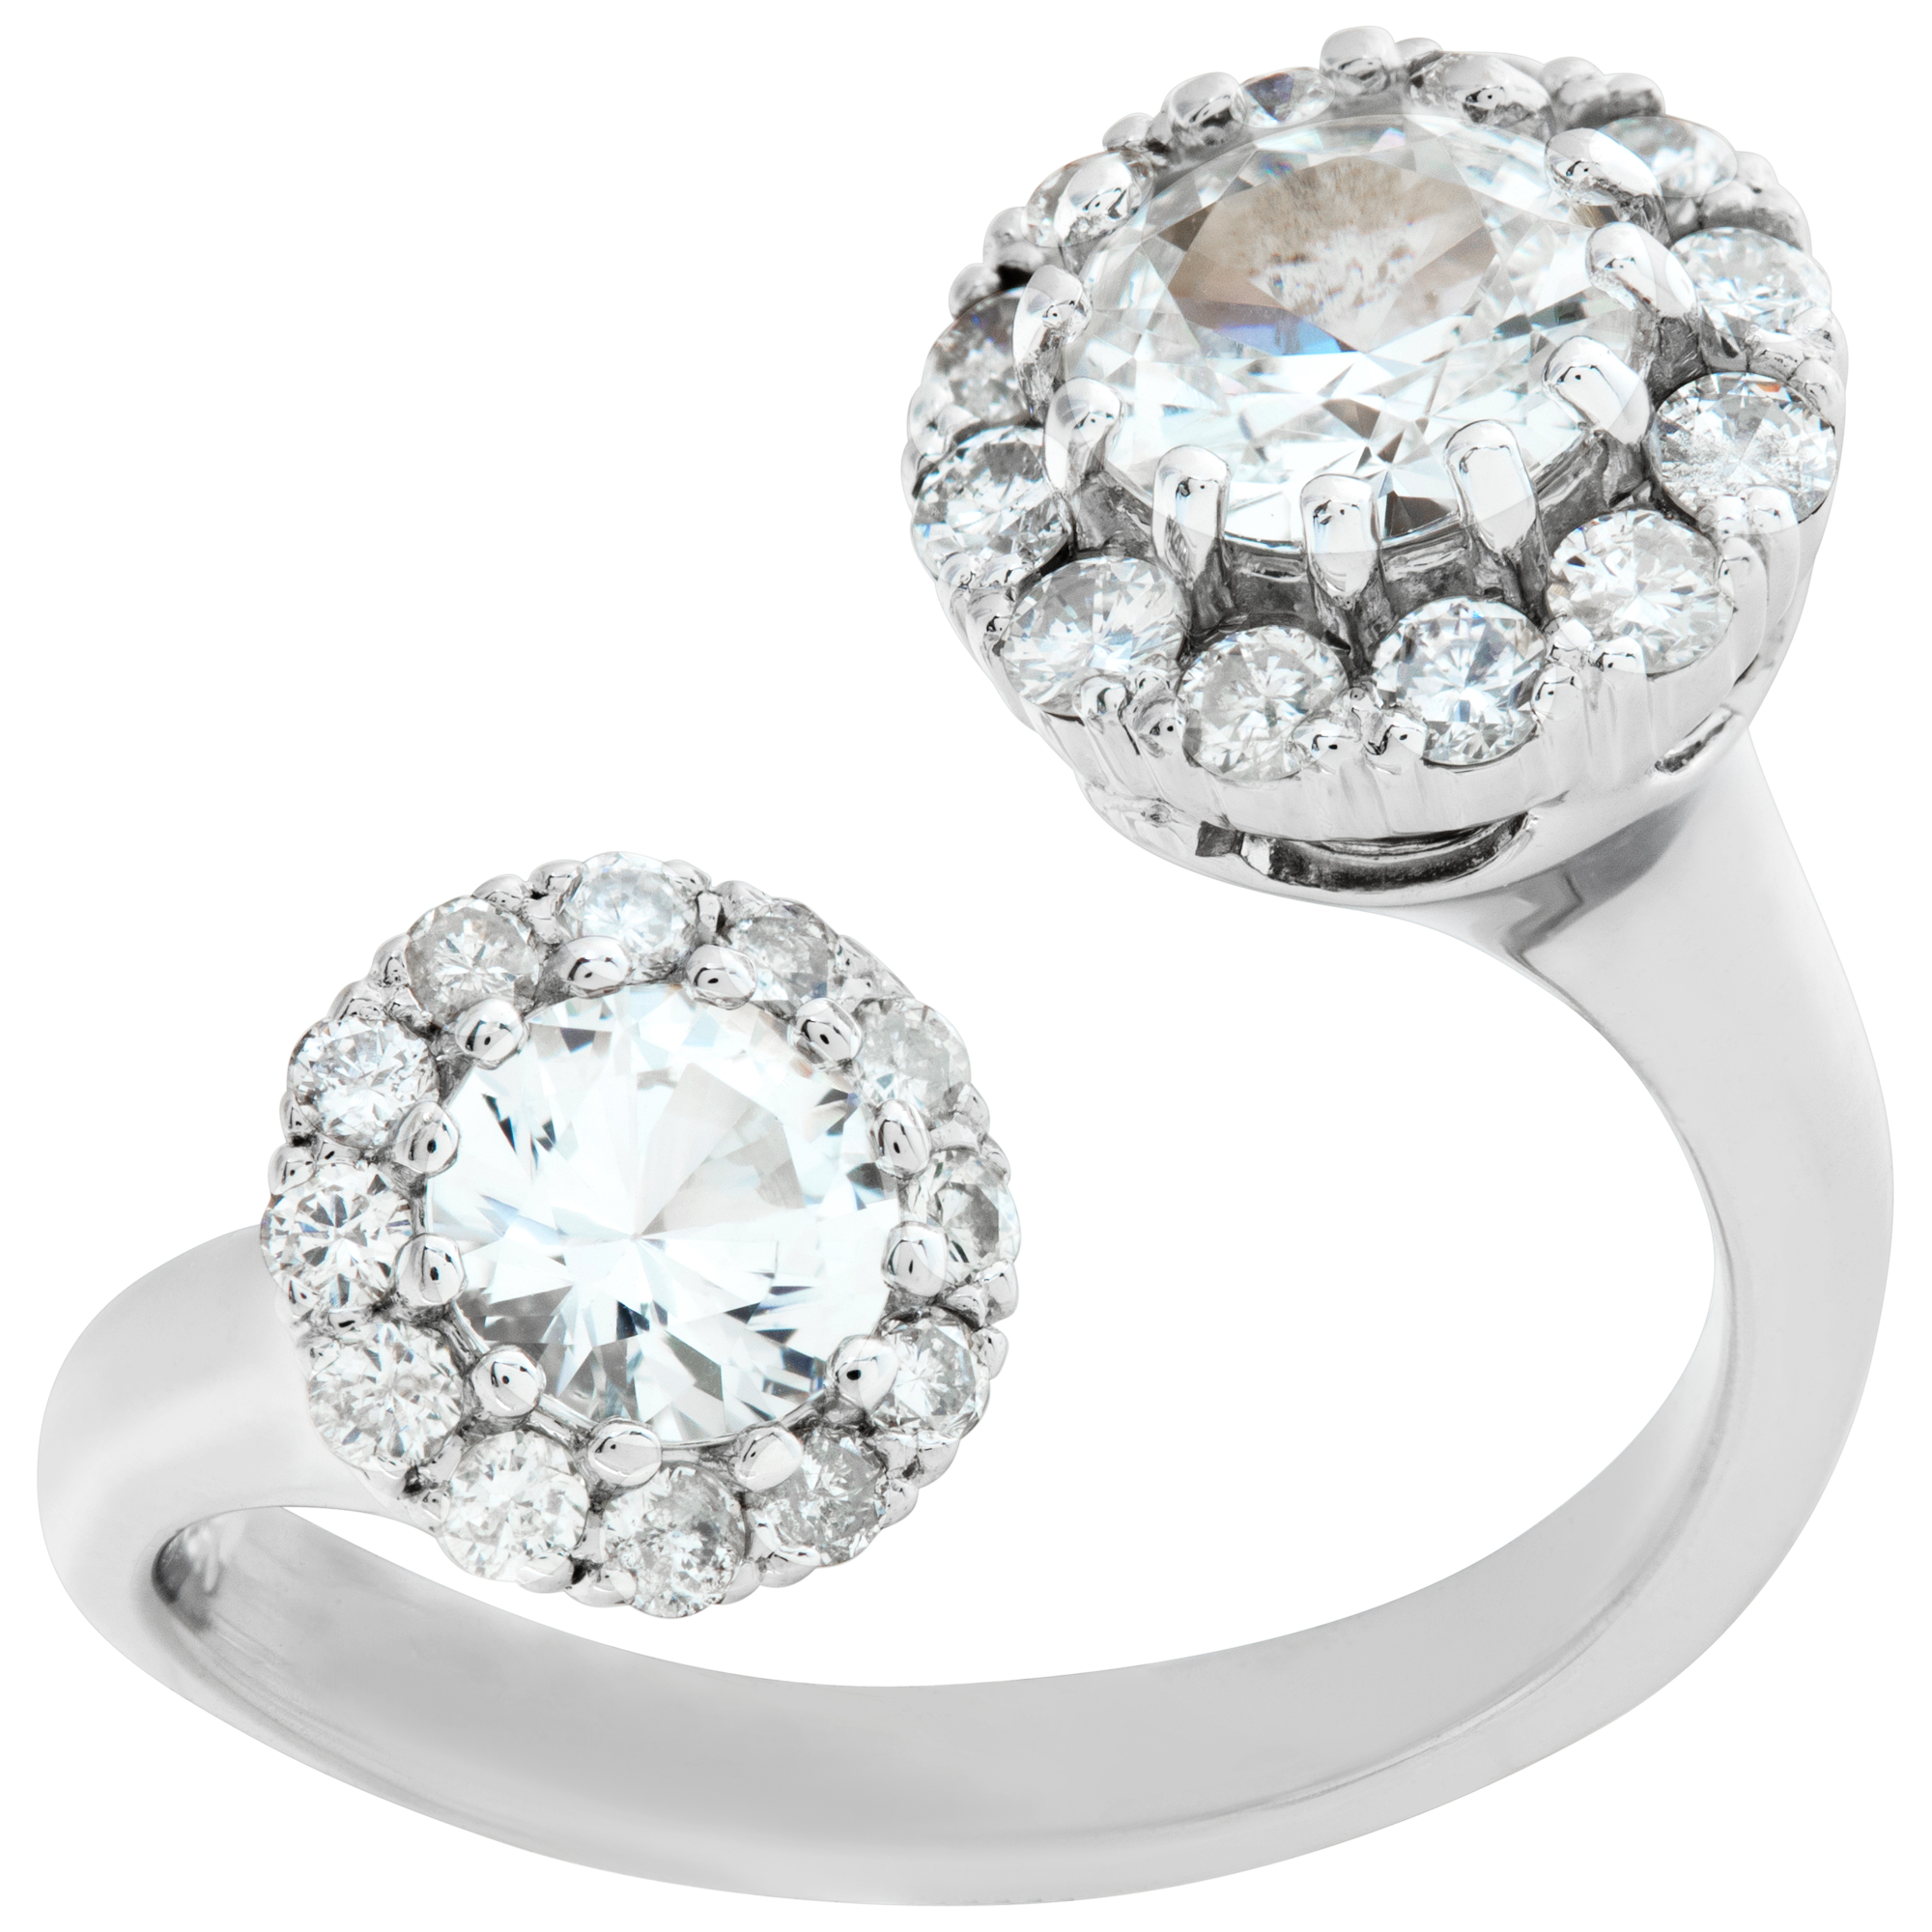 White Sapphires with Halo Diamonds set in 18k white gold. Size 5.25